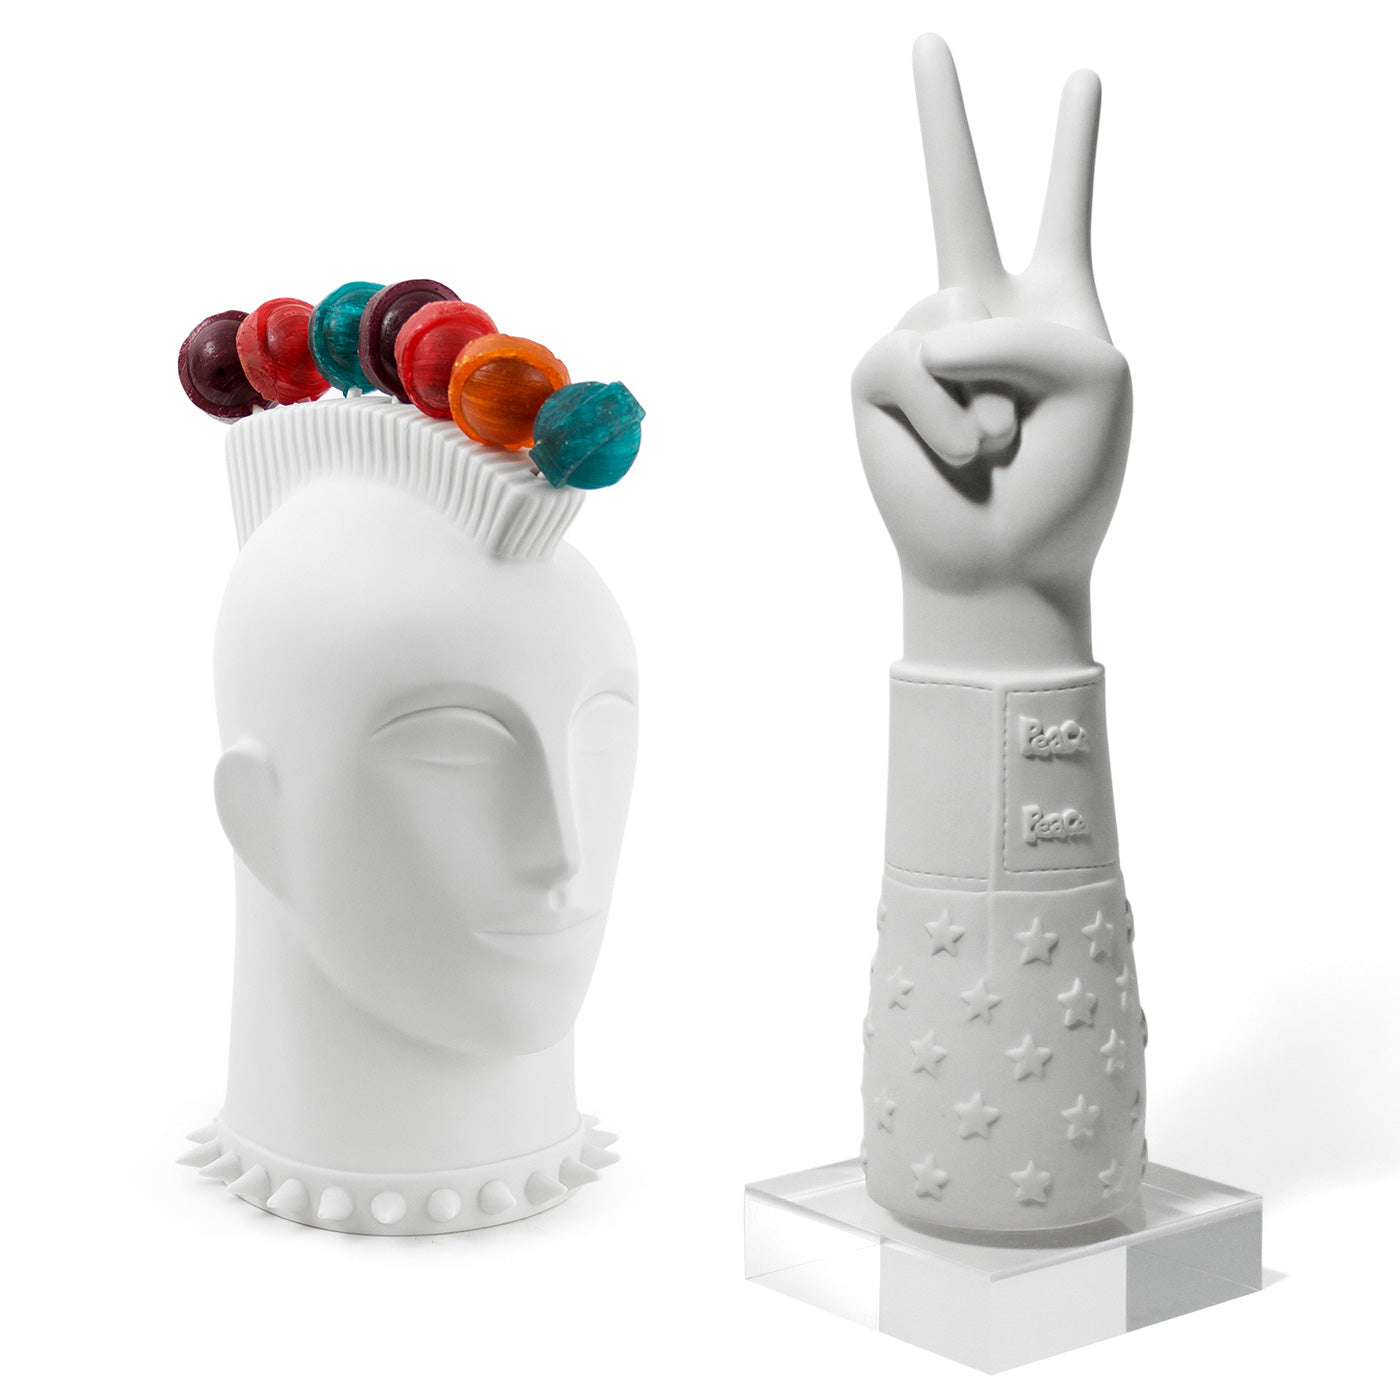 Mohawk Lollipop Holder & Peace Hand Bundle